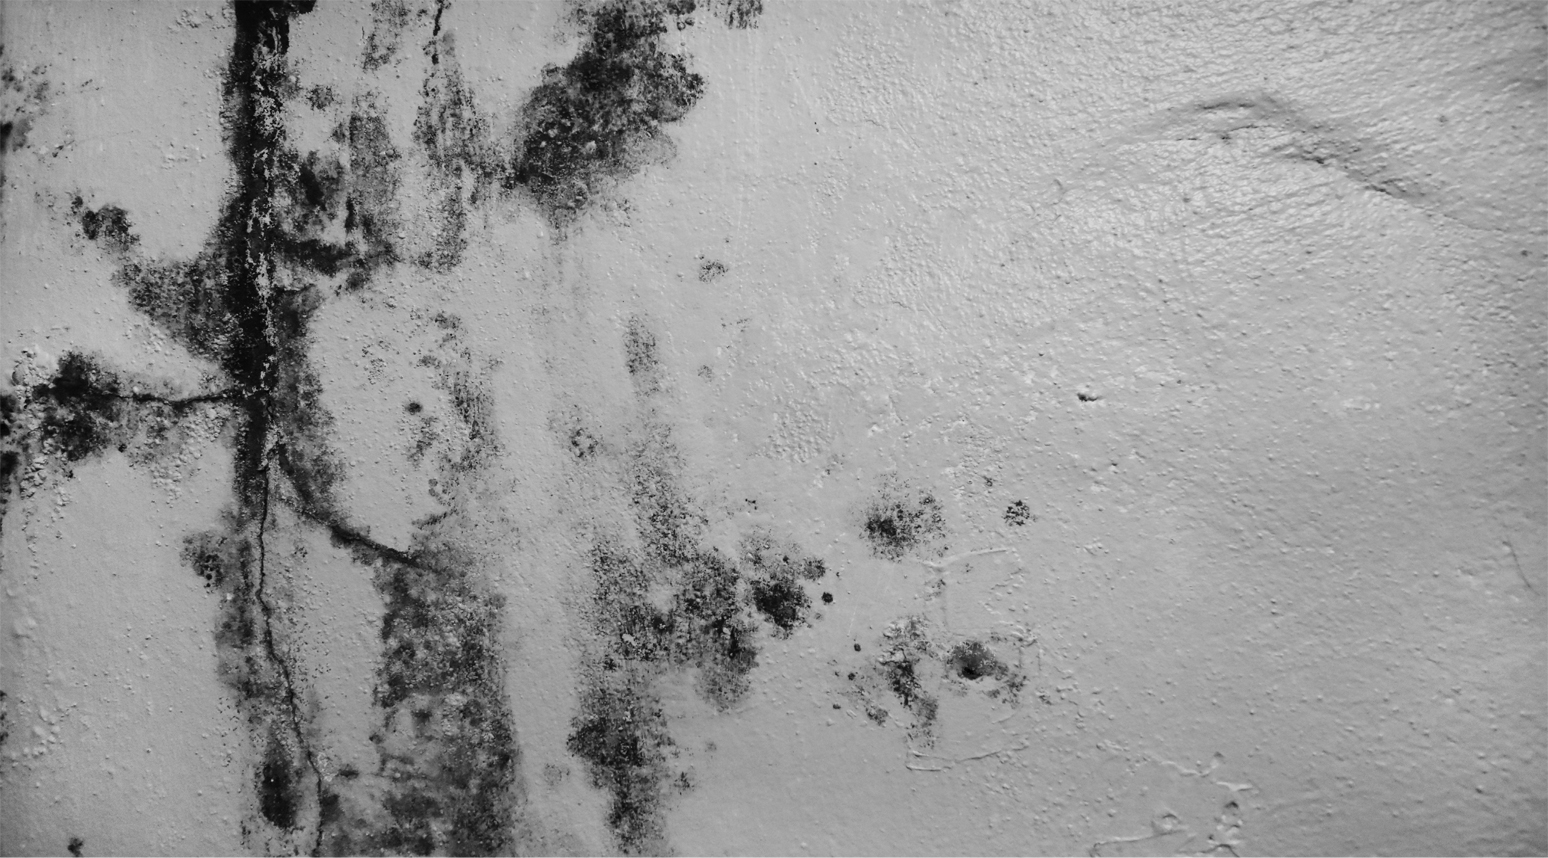 Black mold on cement floor